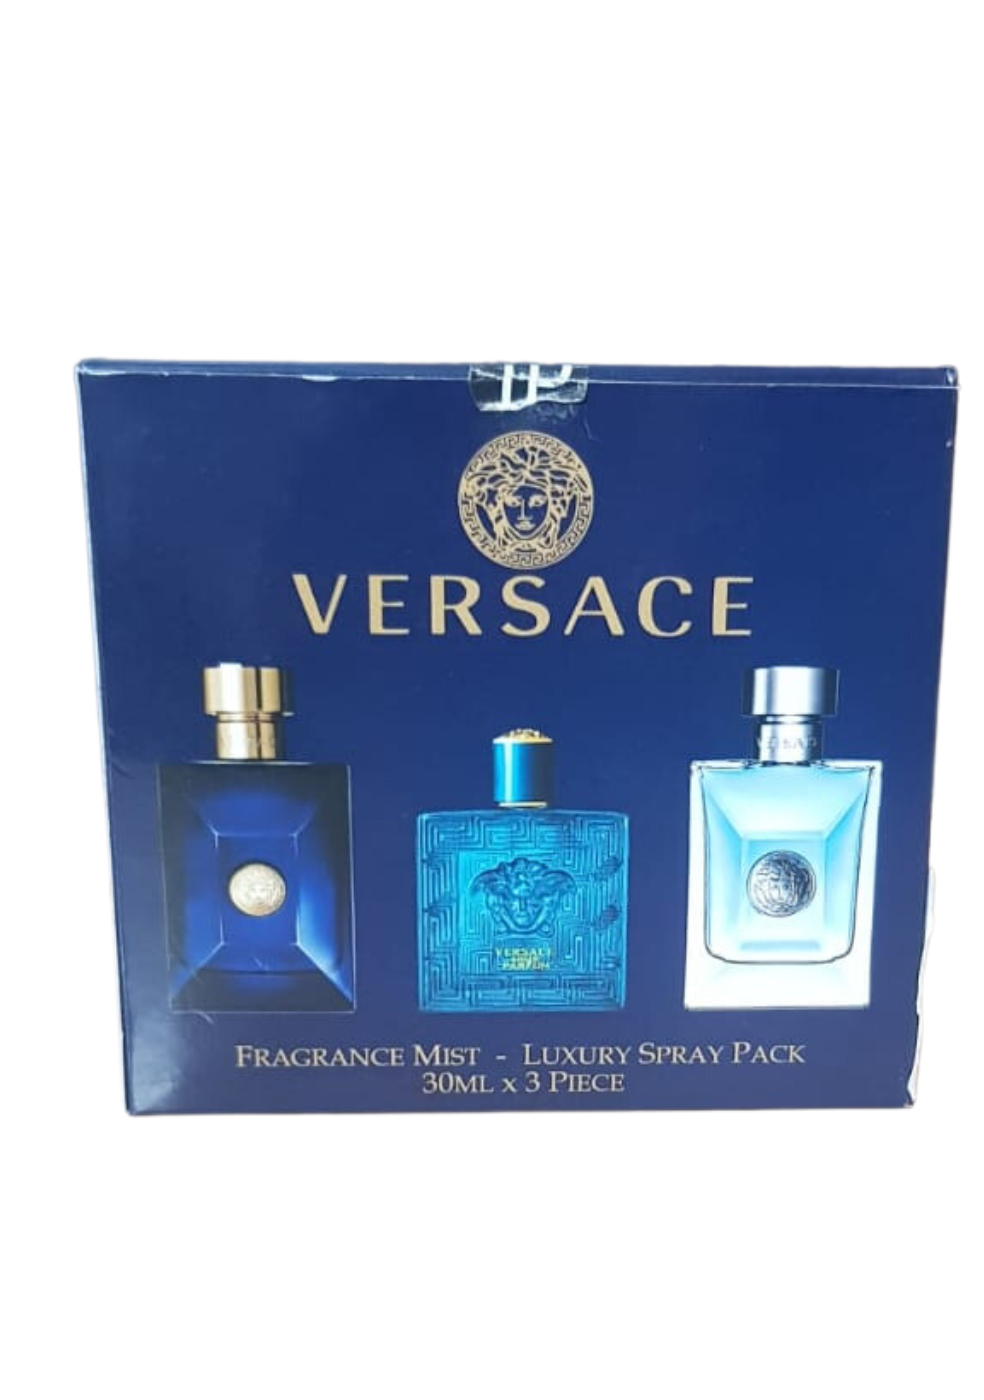 Versace Fragrance Mist